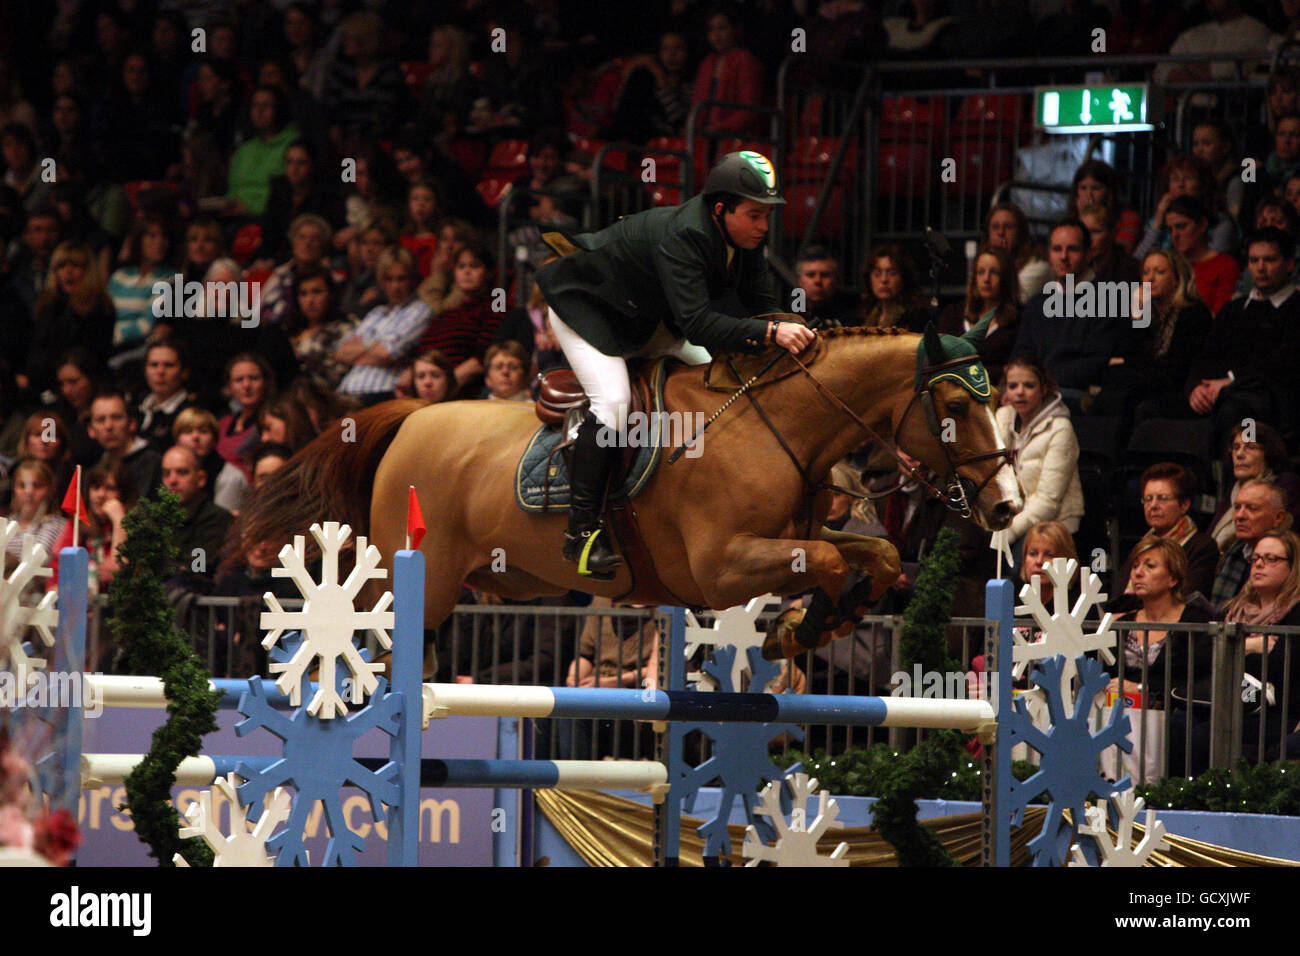 Irlands Cian O'Connor Riding Splendor 2 gewinnt die Santa Stakes während der London International Horse Show im Olympia Exhibition Centre, London. Stockfoto